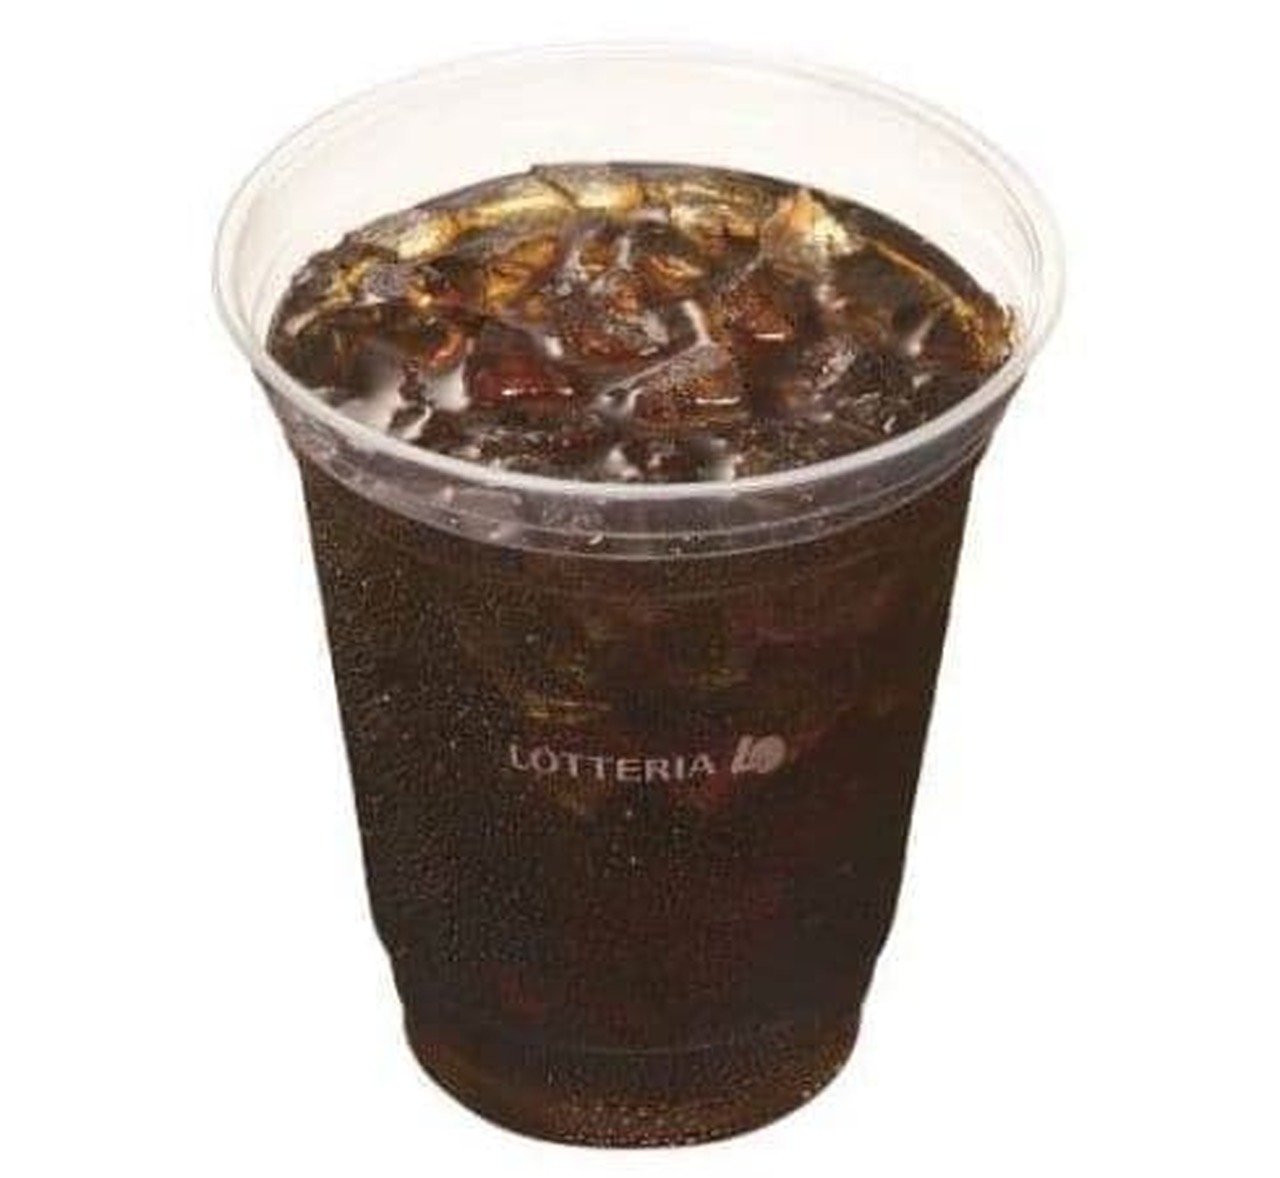 Lotteria "Ice Coffee"